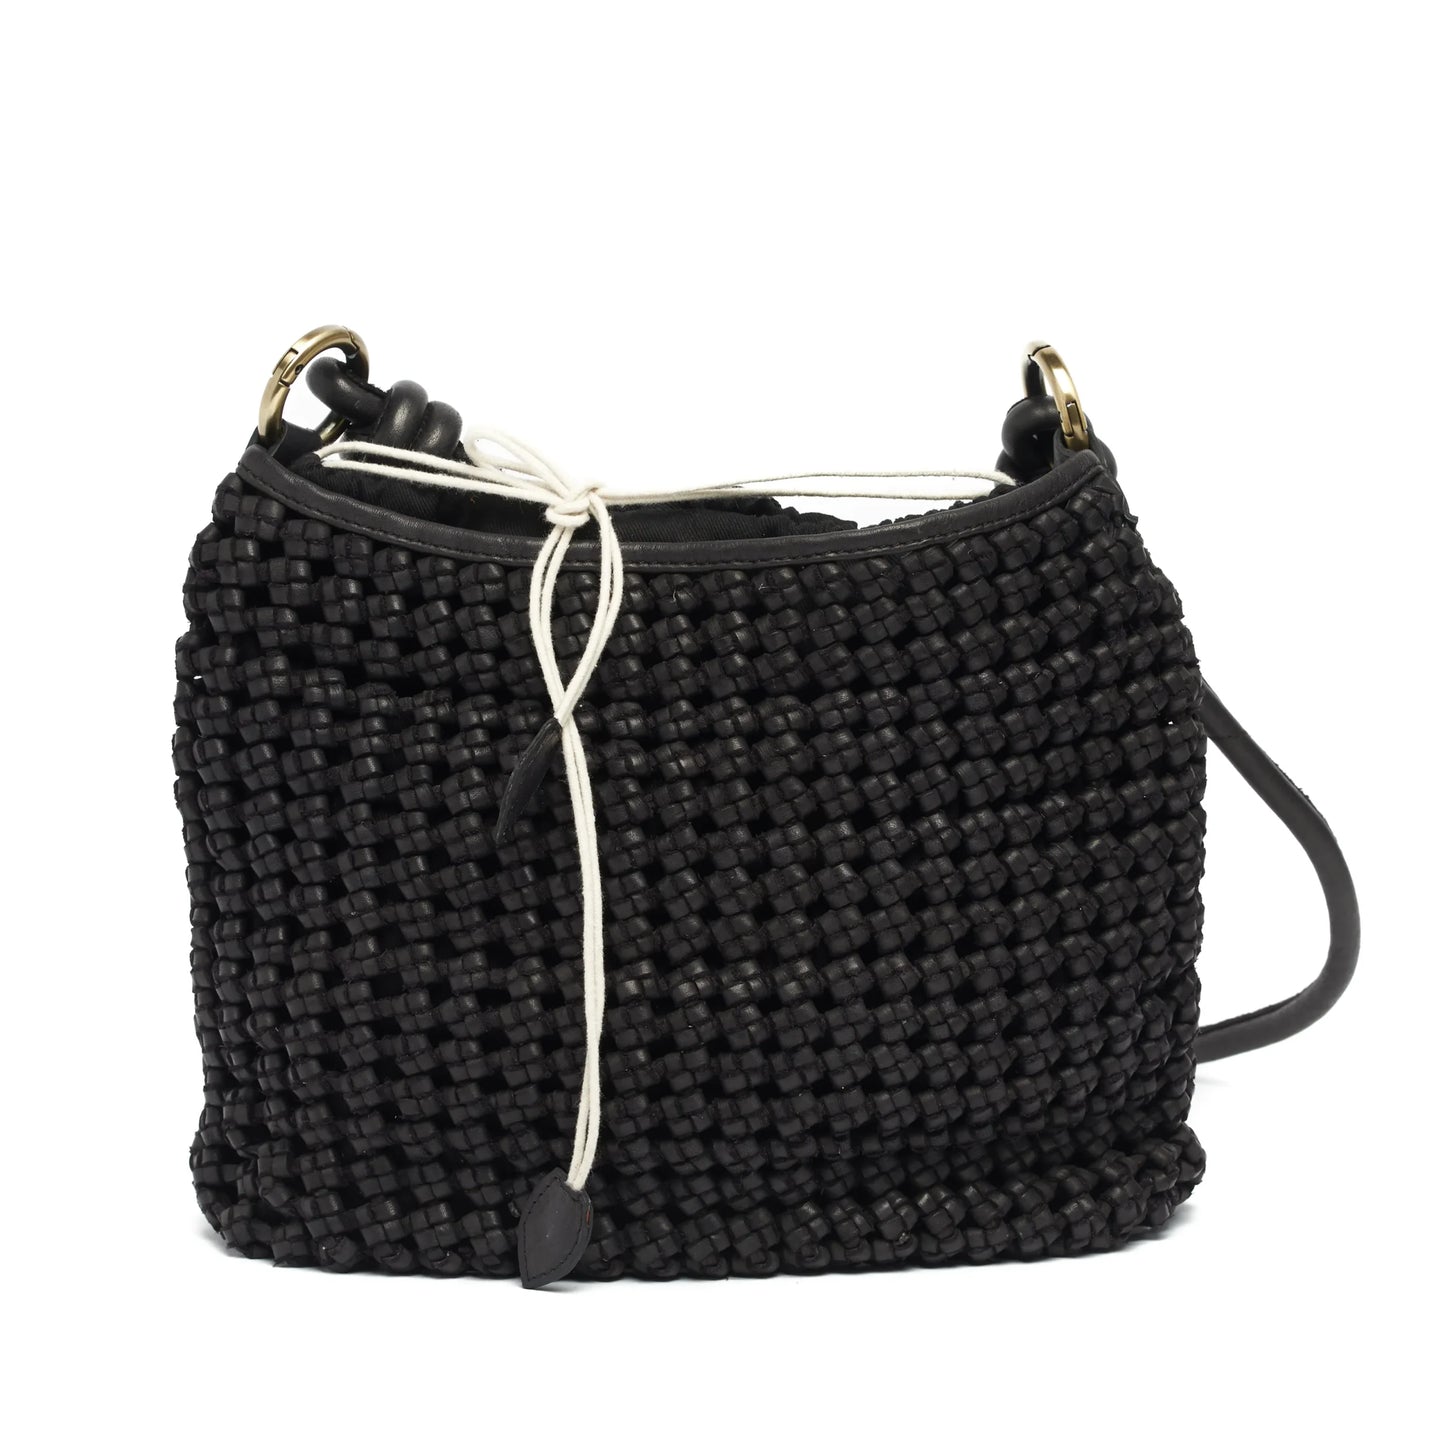 Rugged Hide RH-4921 Tallow leather handbag